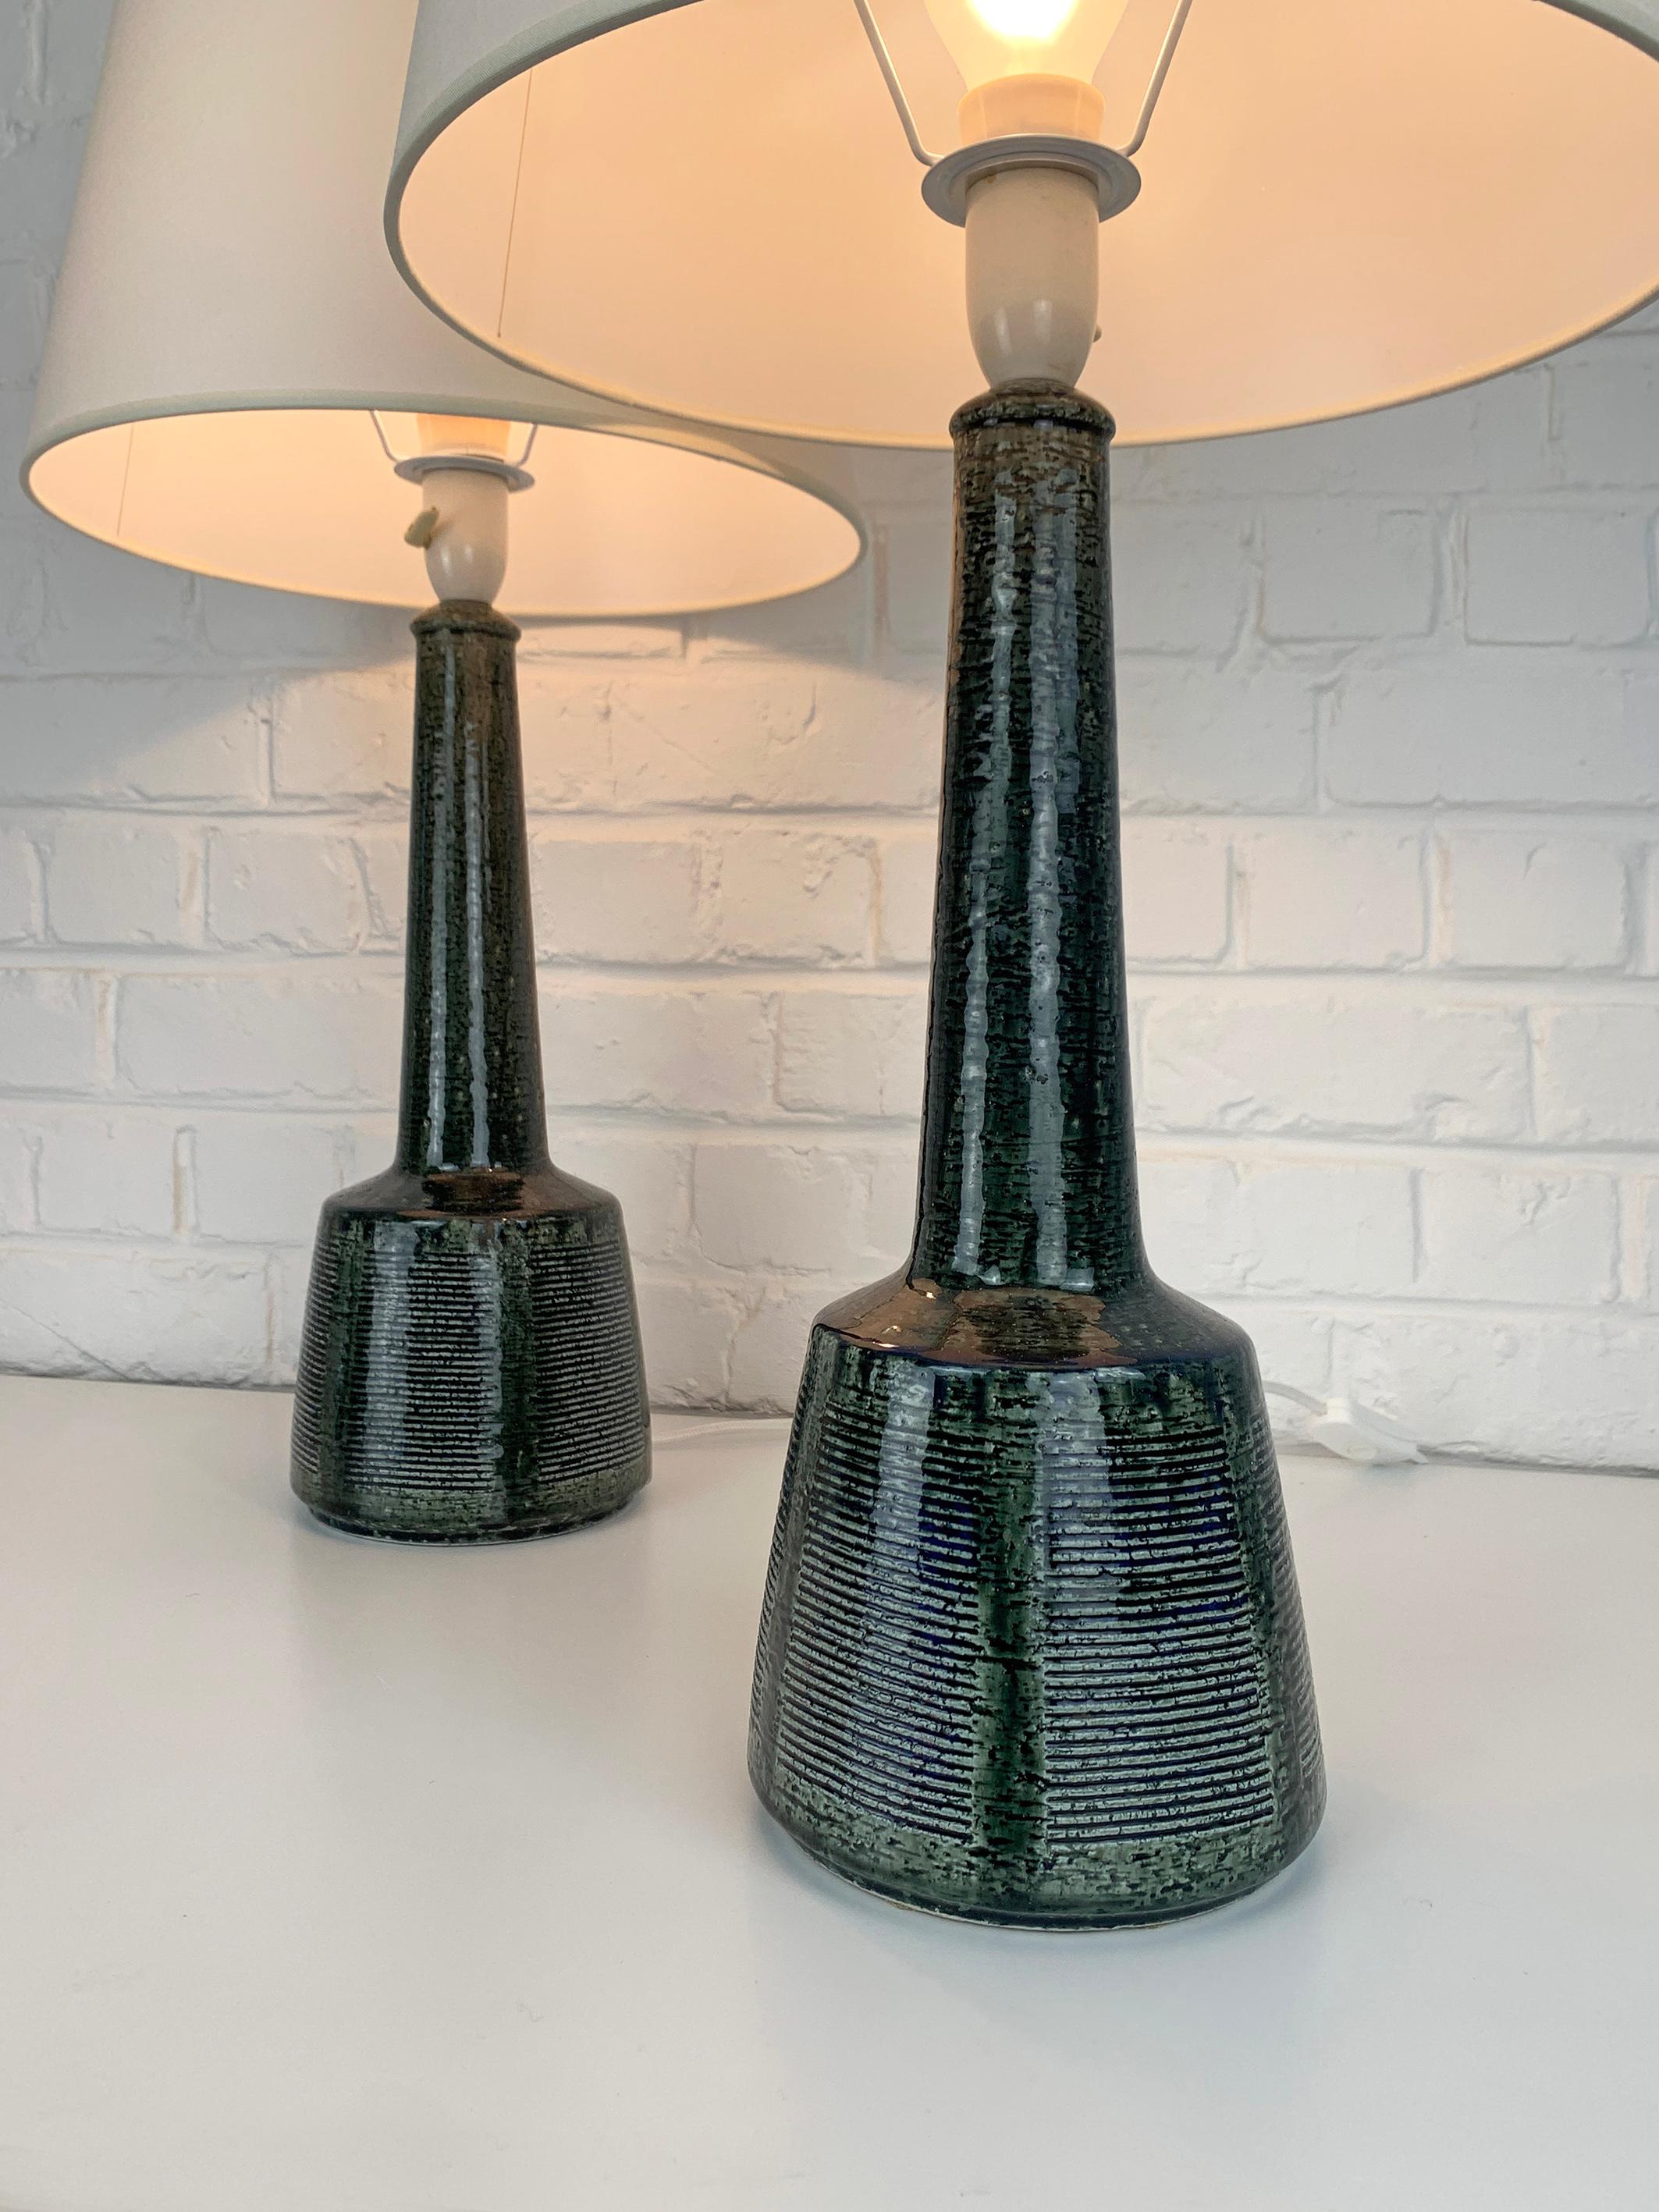 Scandinavian Modern Pair of Tall Ceramic table lamps by Palshus, design by Esben Klint for Le Klint